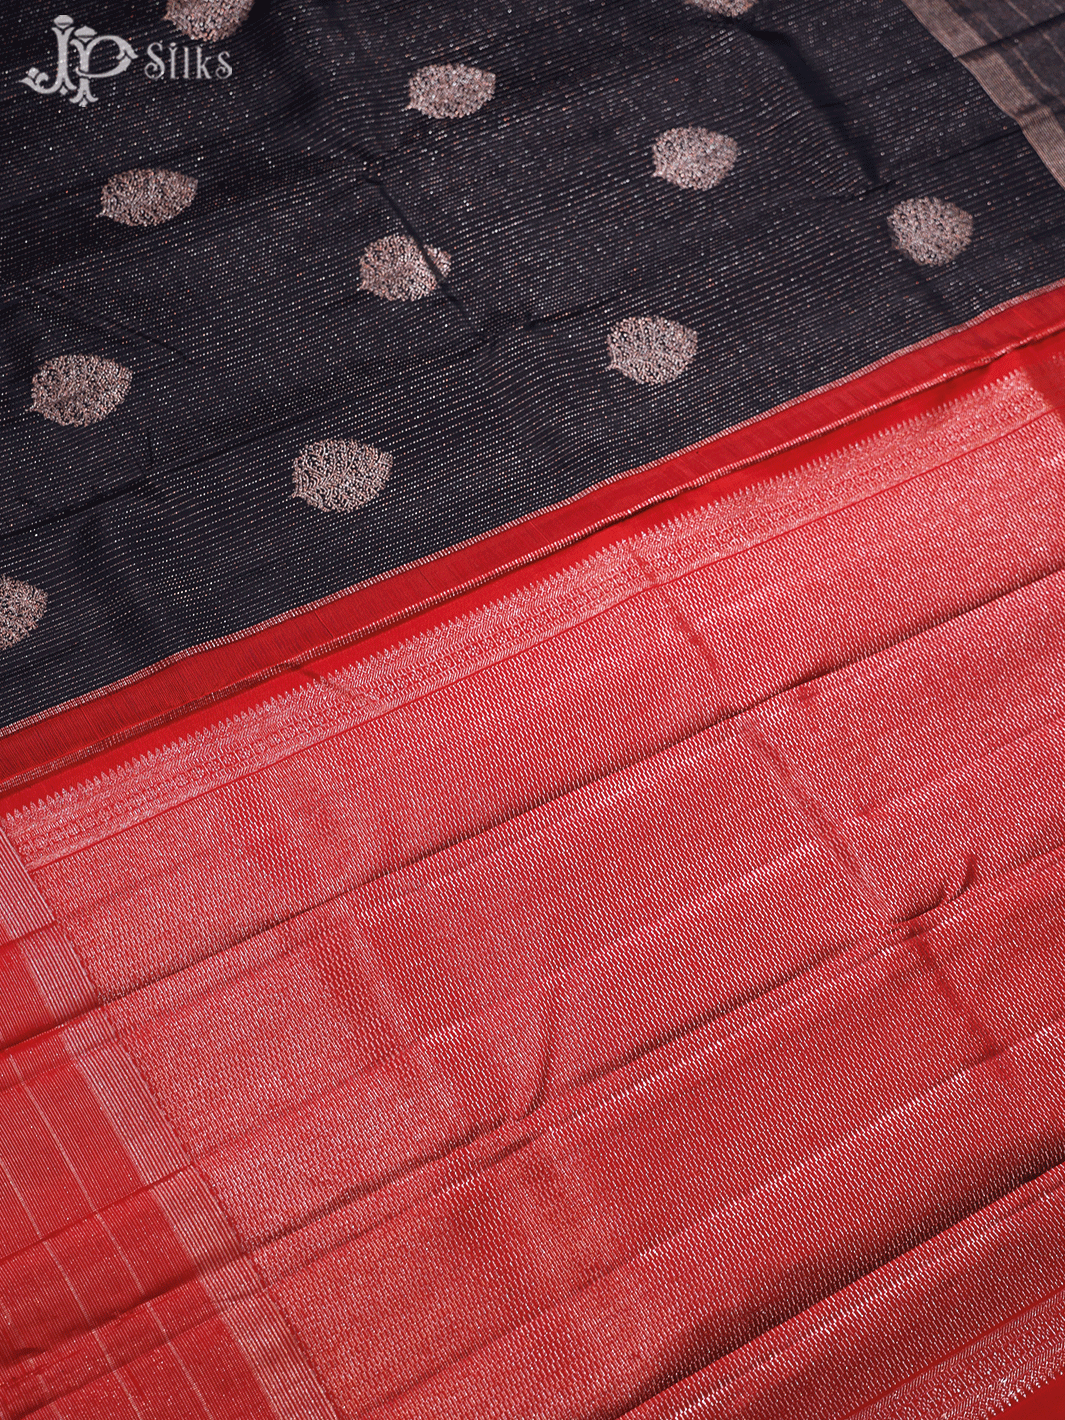 Black Red Leaf Design Kanchipuram Silk Saree - E5219 - View 4